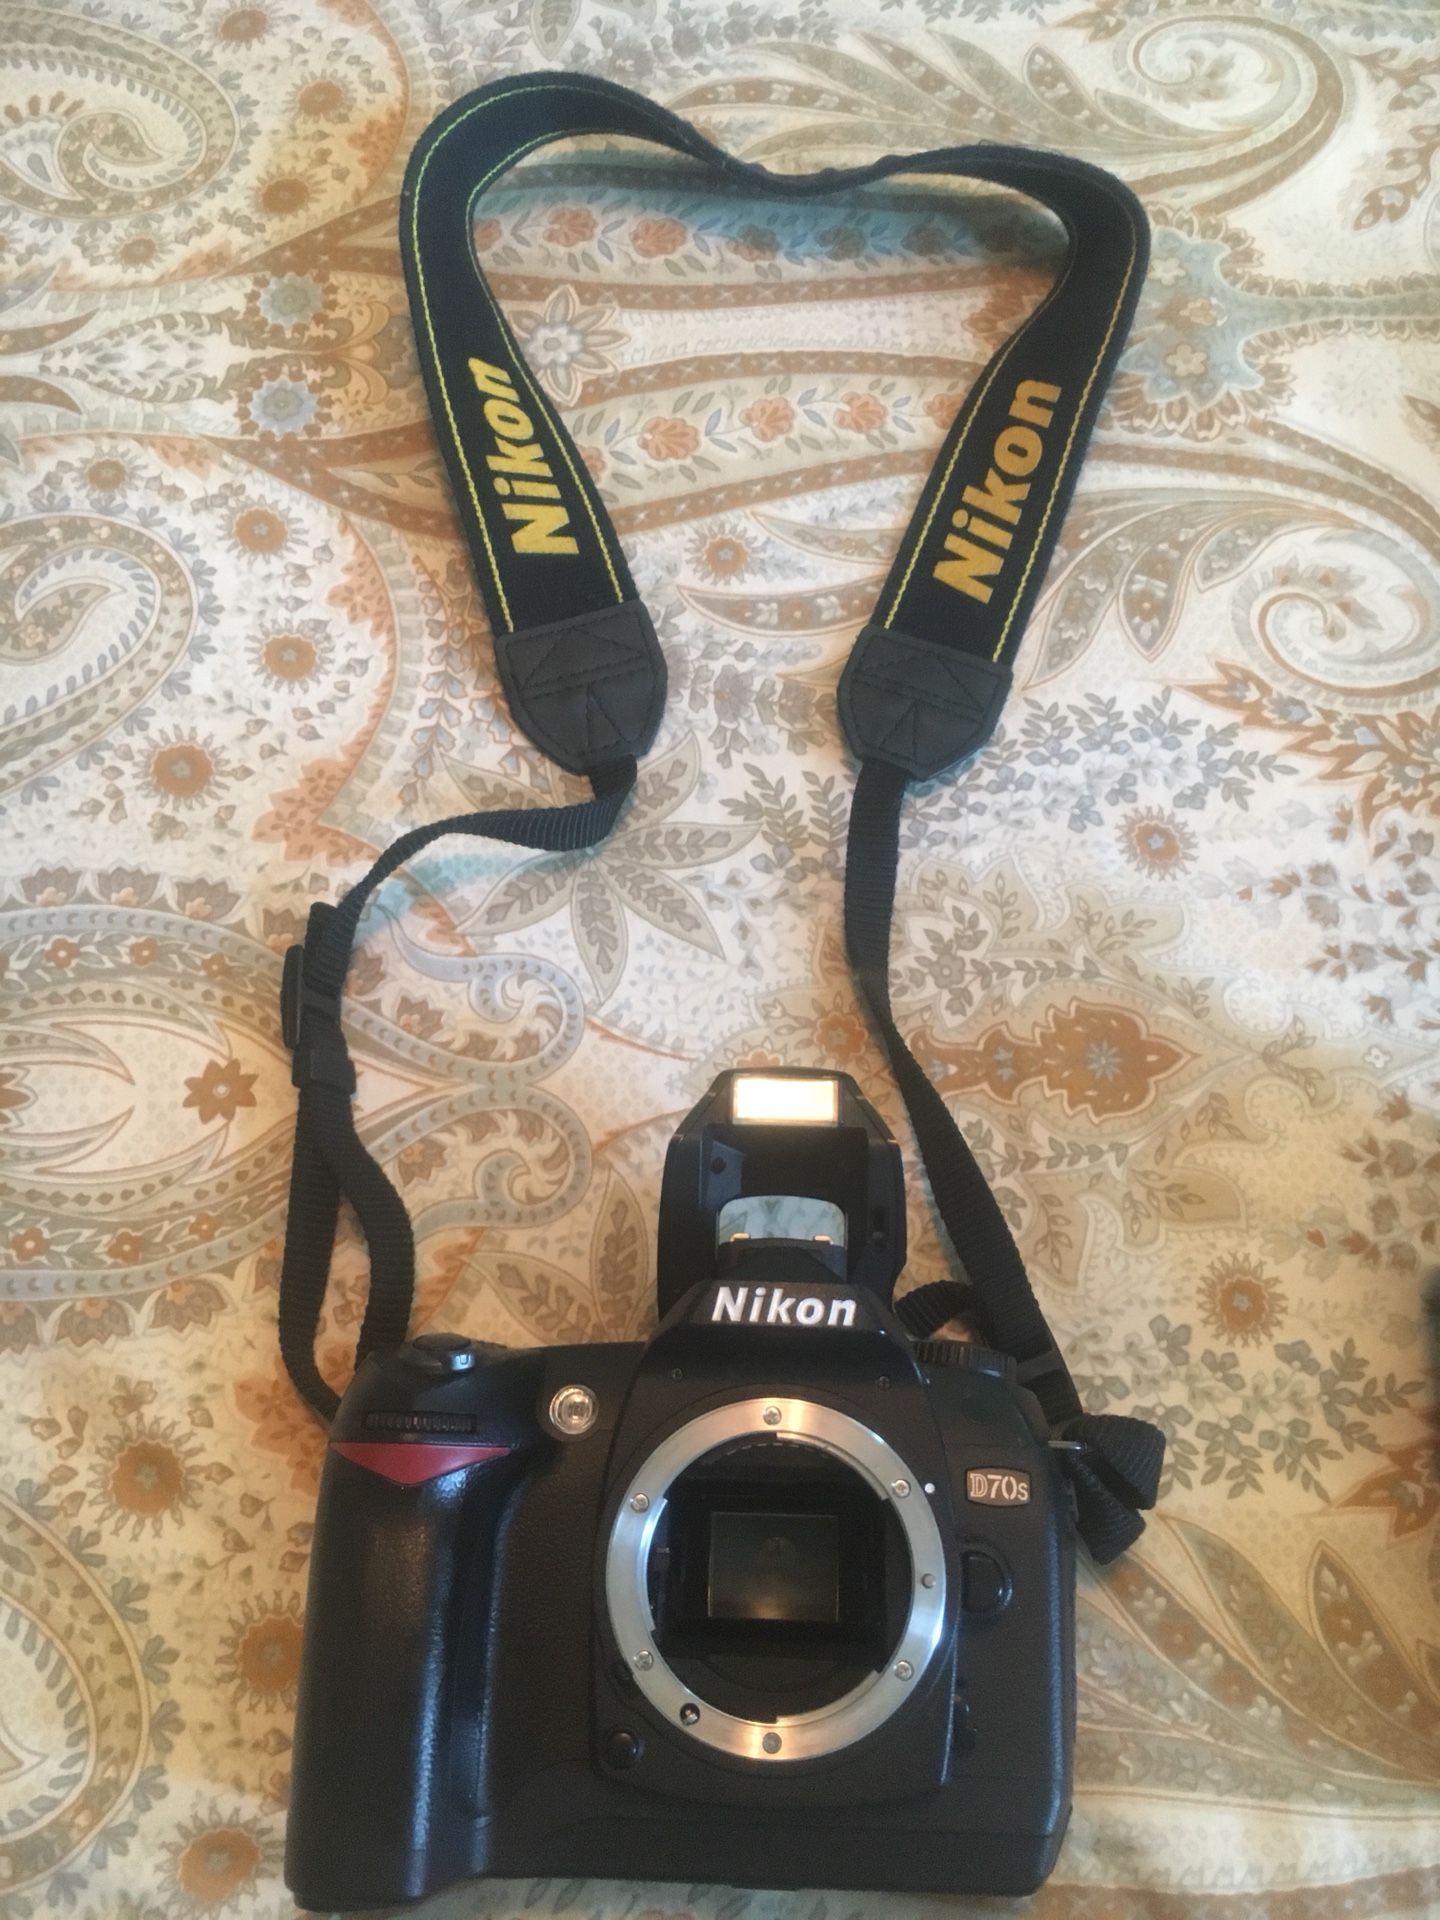 Nikon D 70 S